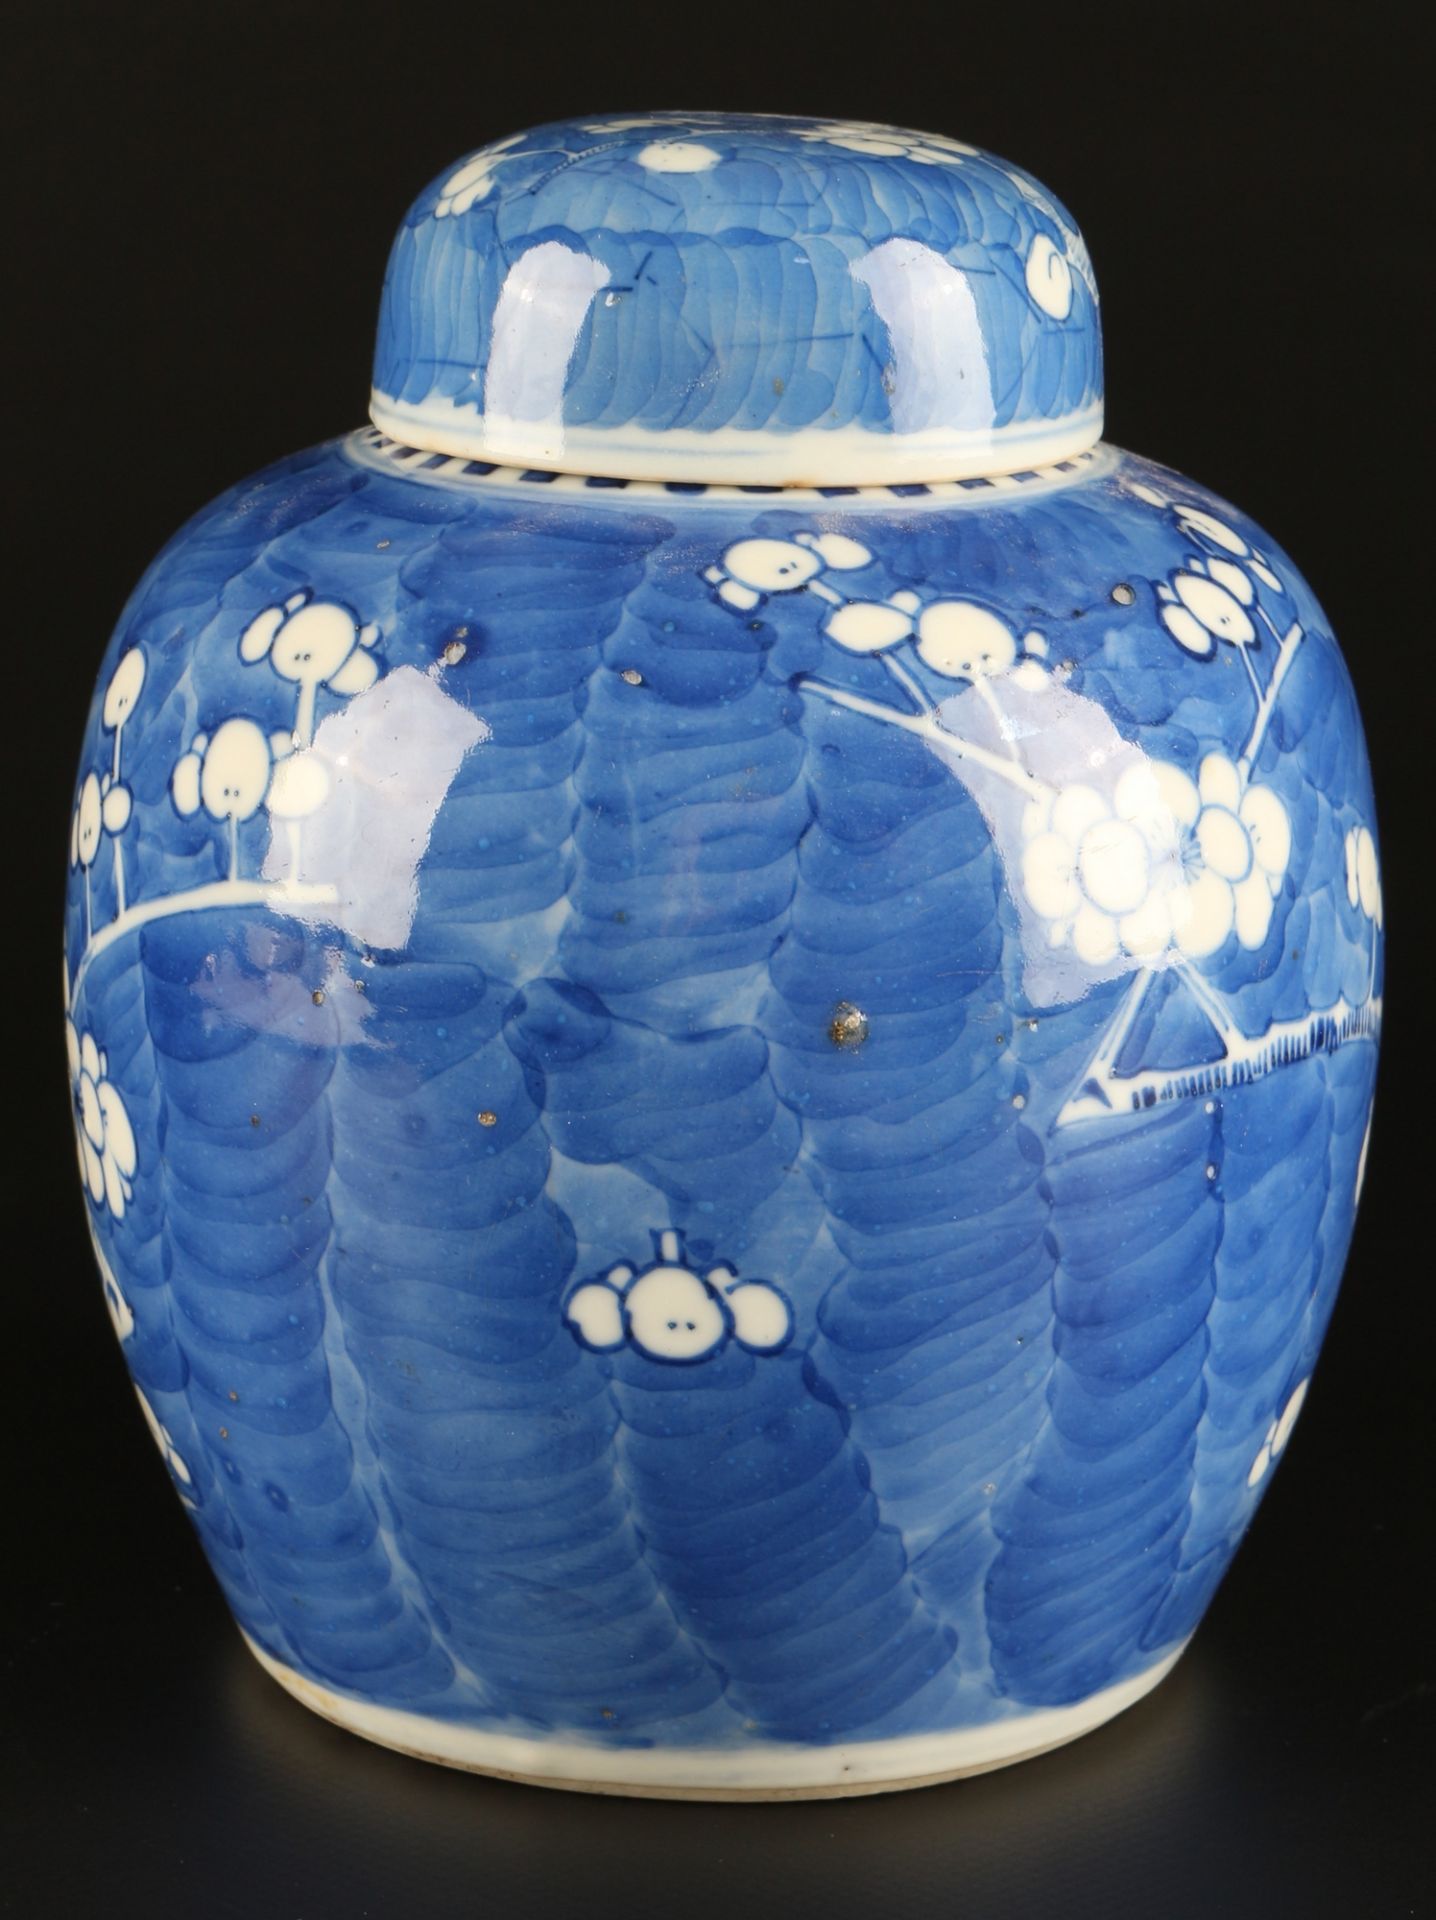 China Ingwertopf Qing Dynasty chinese ginger jar, - Image 2 of 6